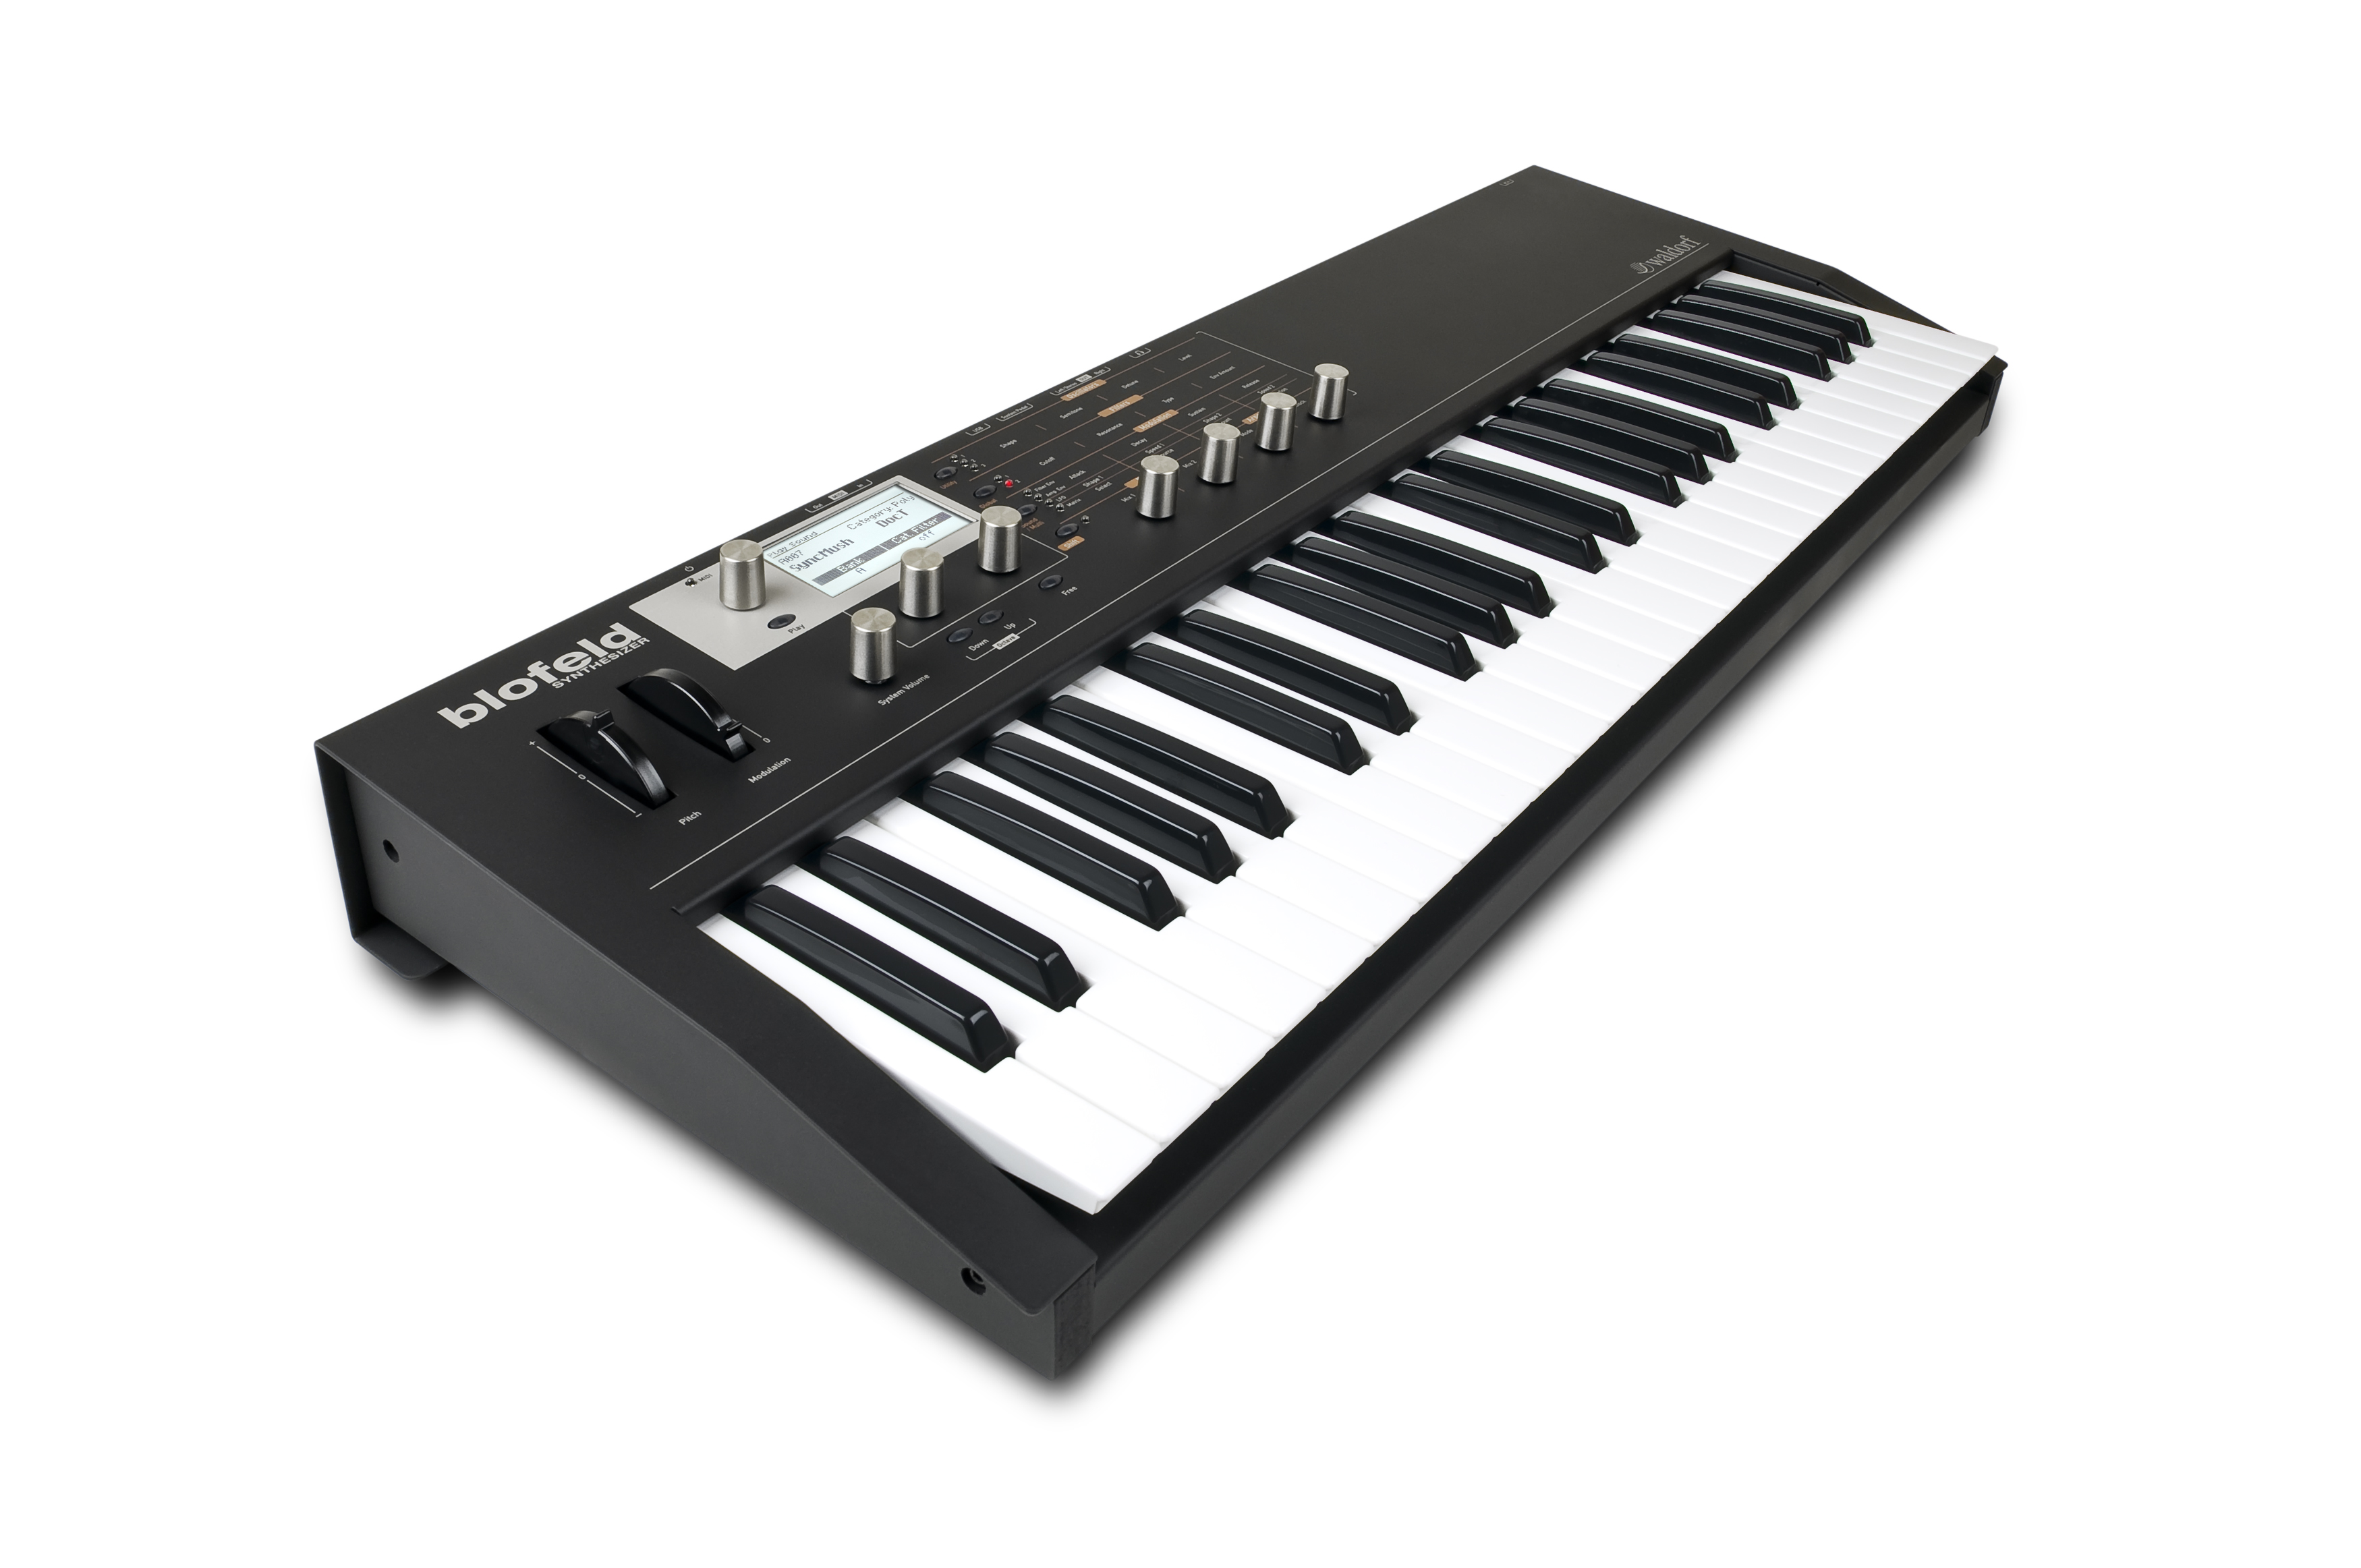 Blofeld Keyboard schwarz